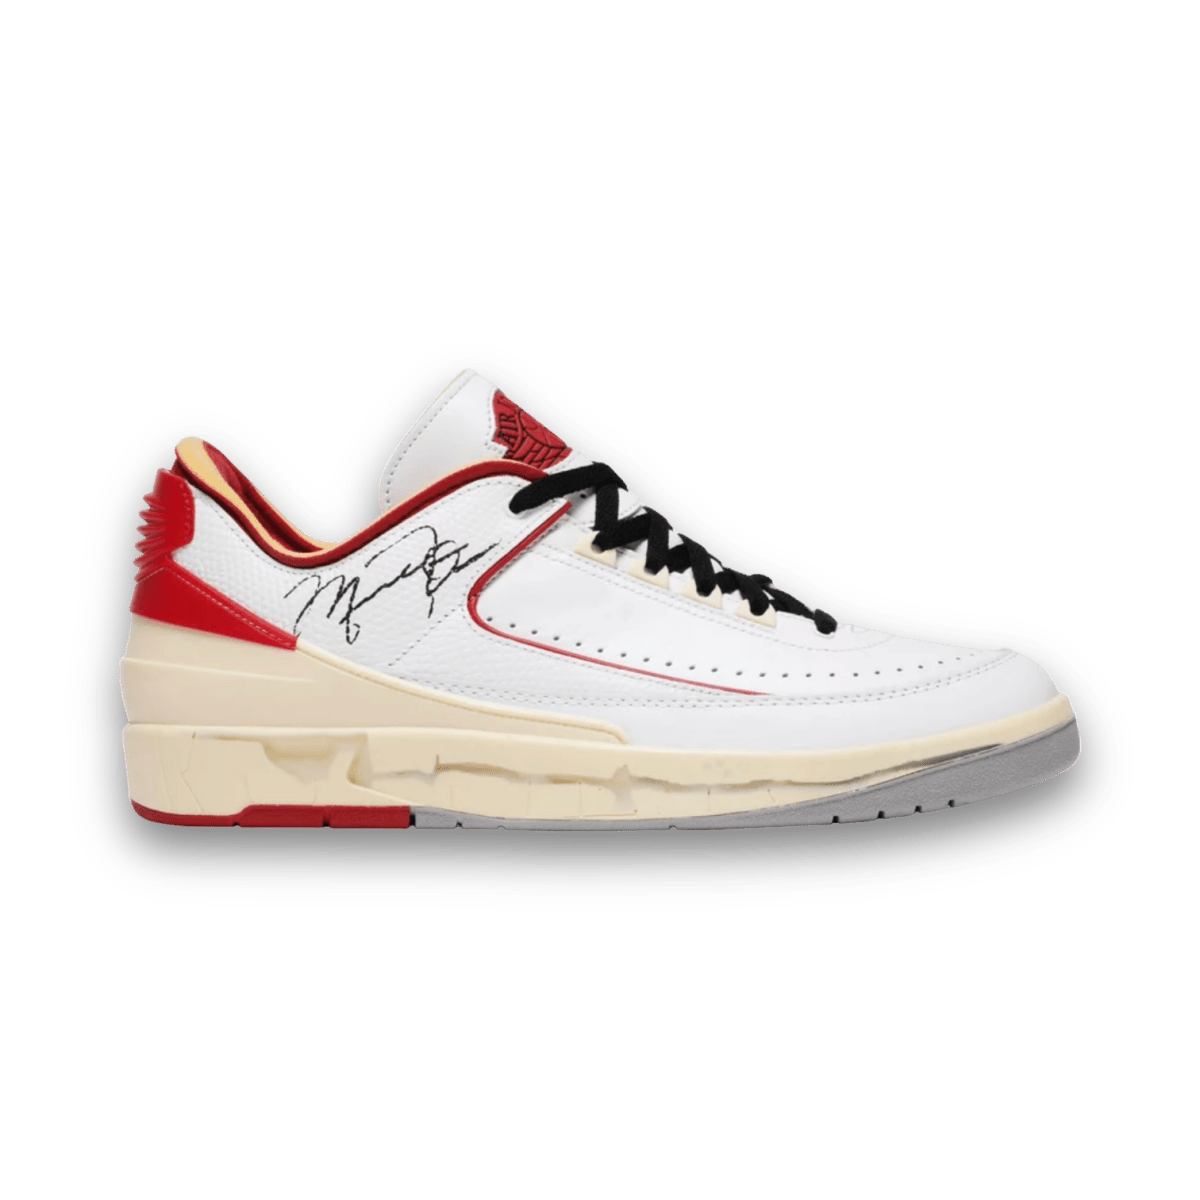 Off-White x Air Jordan 2 Retro Low SP 'White Varsity Red' - Low Sneaker - Jawns on Fire Sneakers & Streetwear